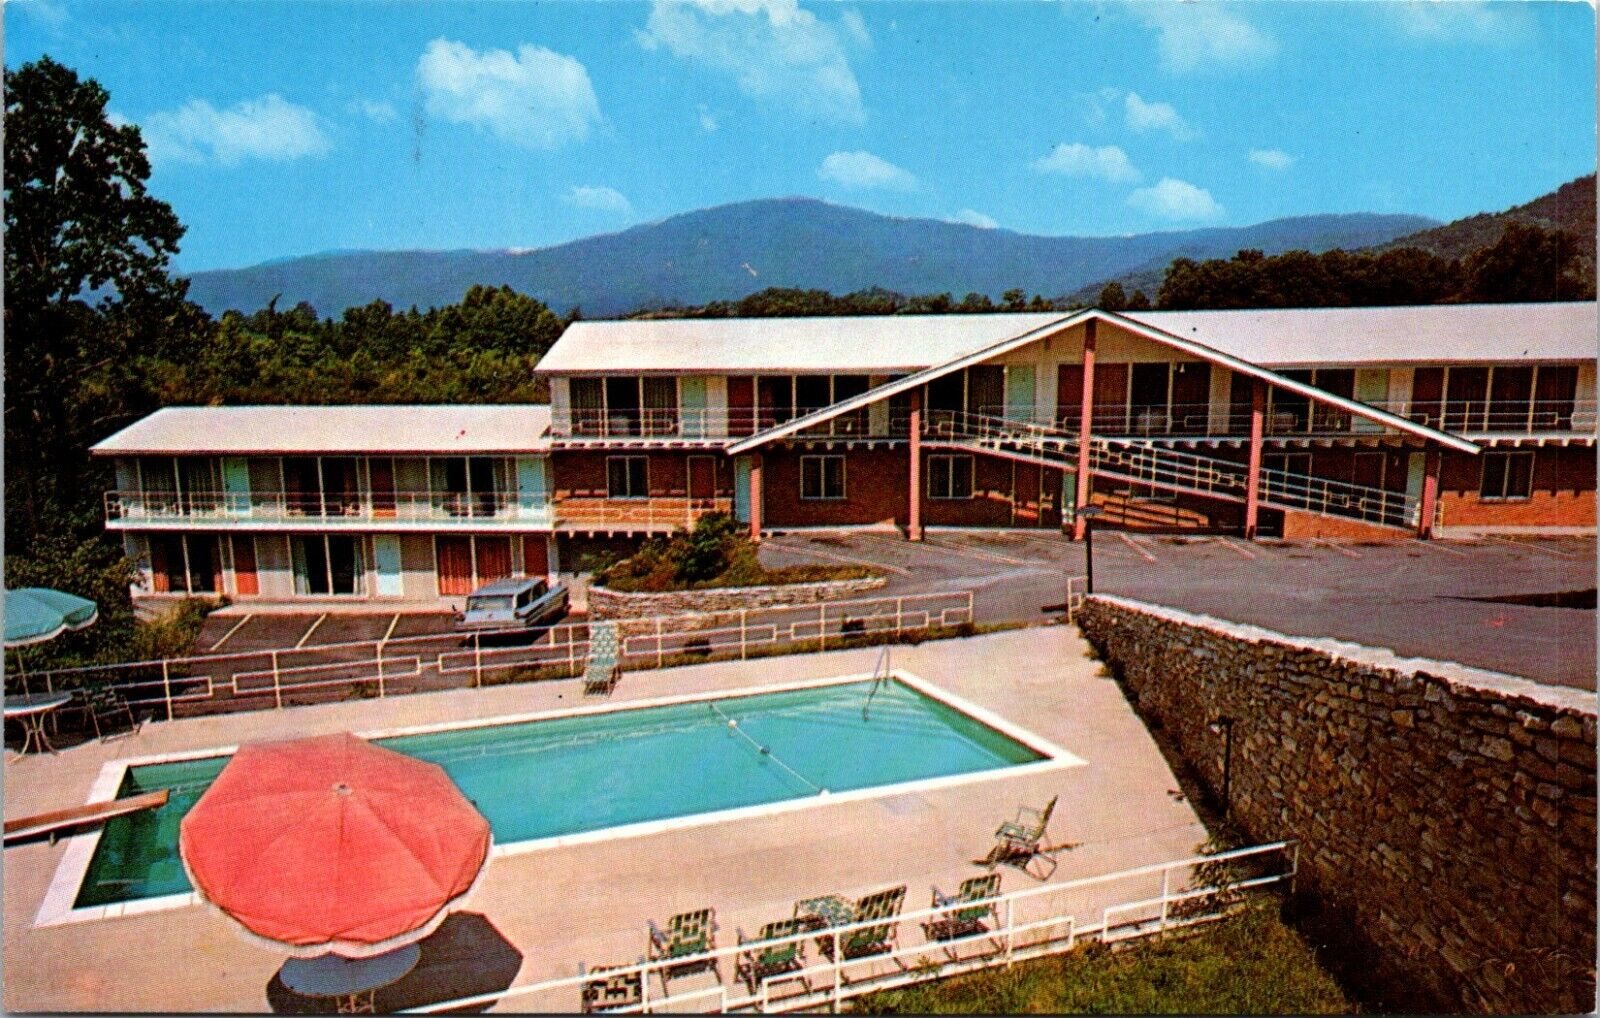 Boone Trail Motel Middlesboro KY Pool Station Wagon Kentucky postcard P6